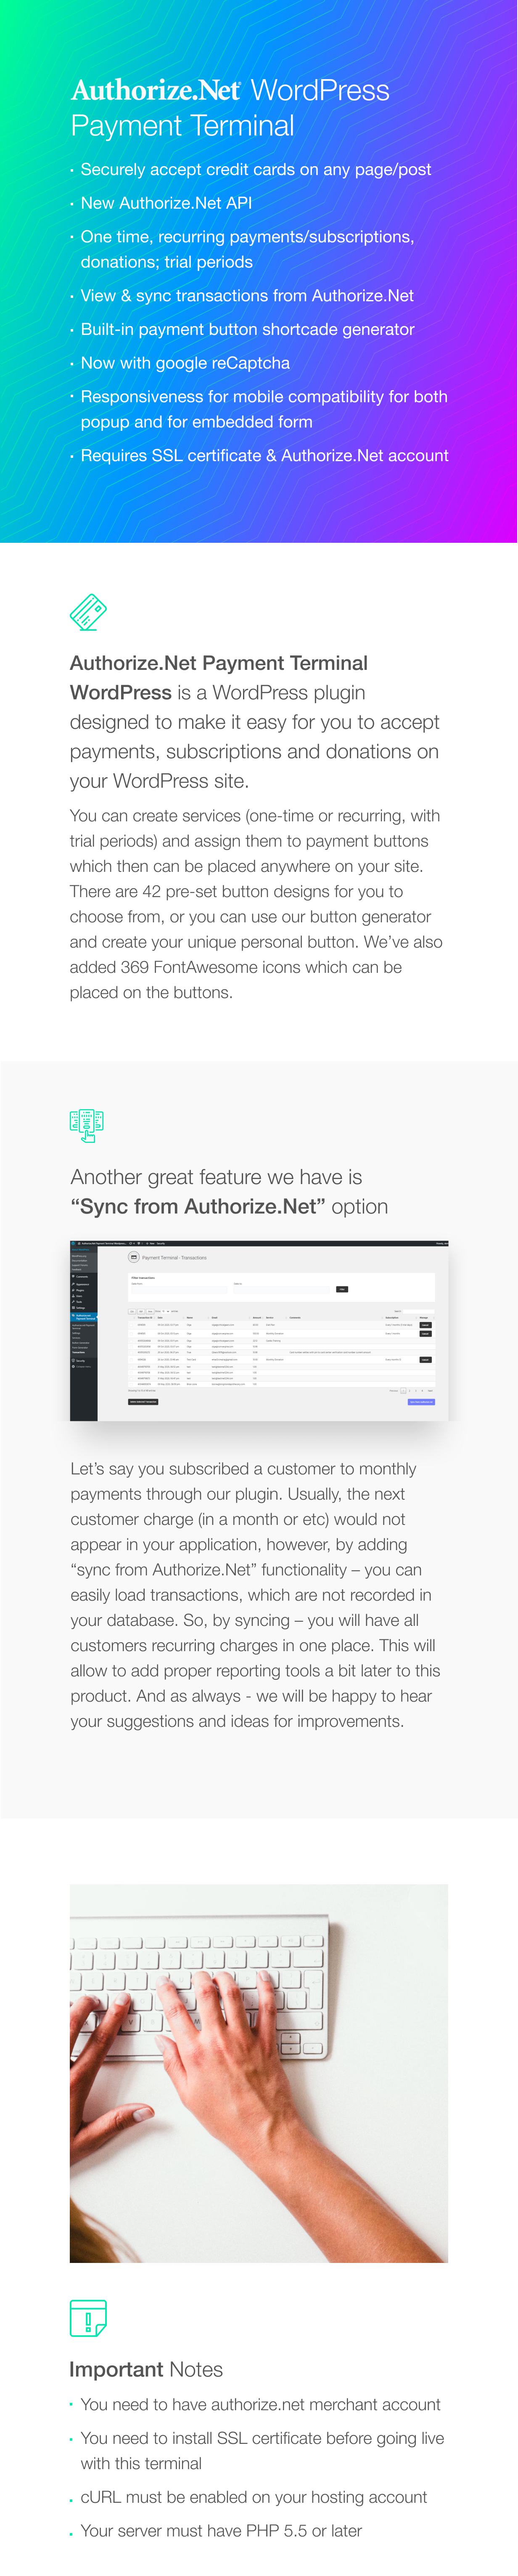 Authorize.Net Payment Terminal WordPress - 1